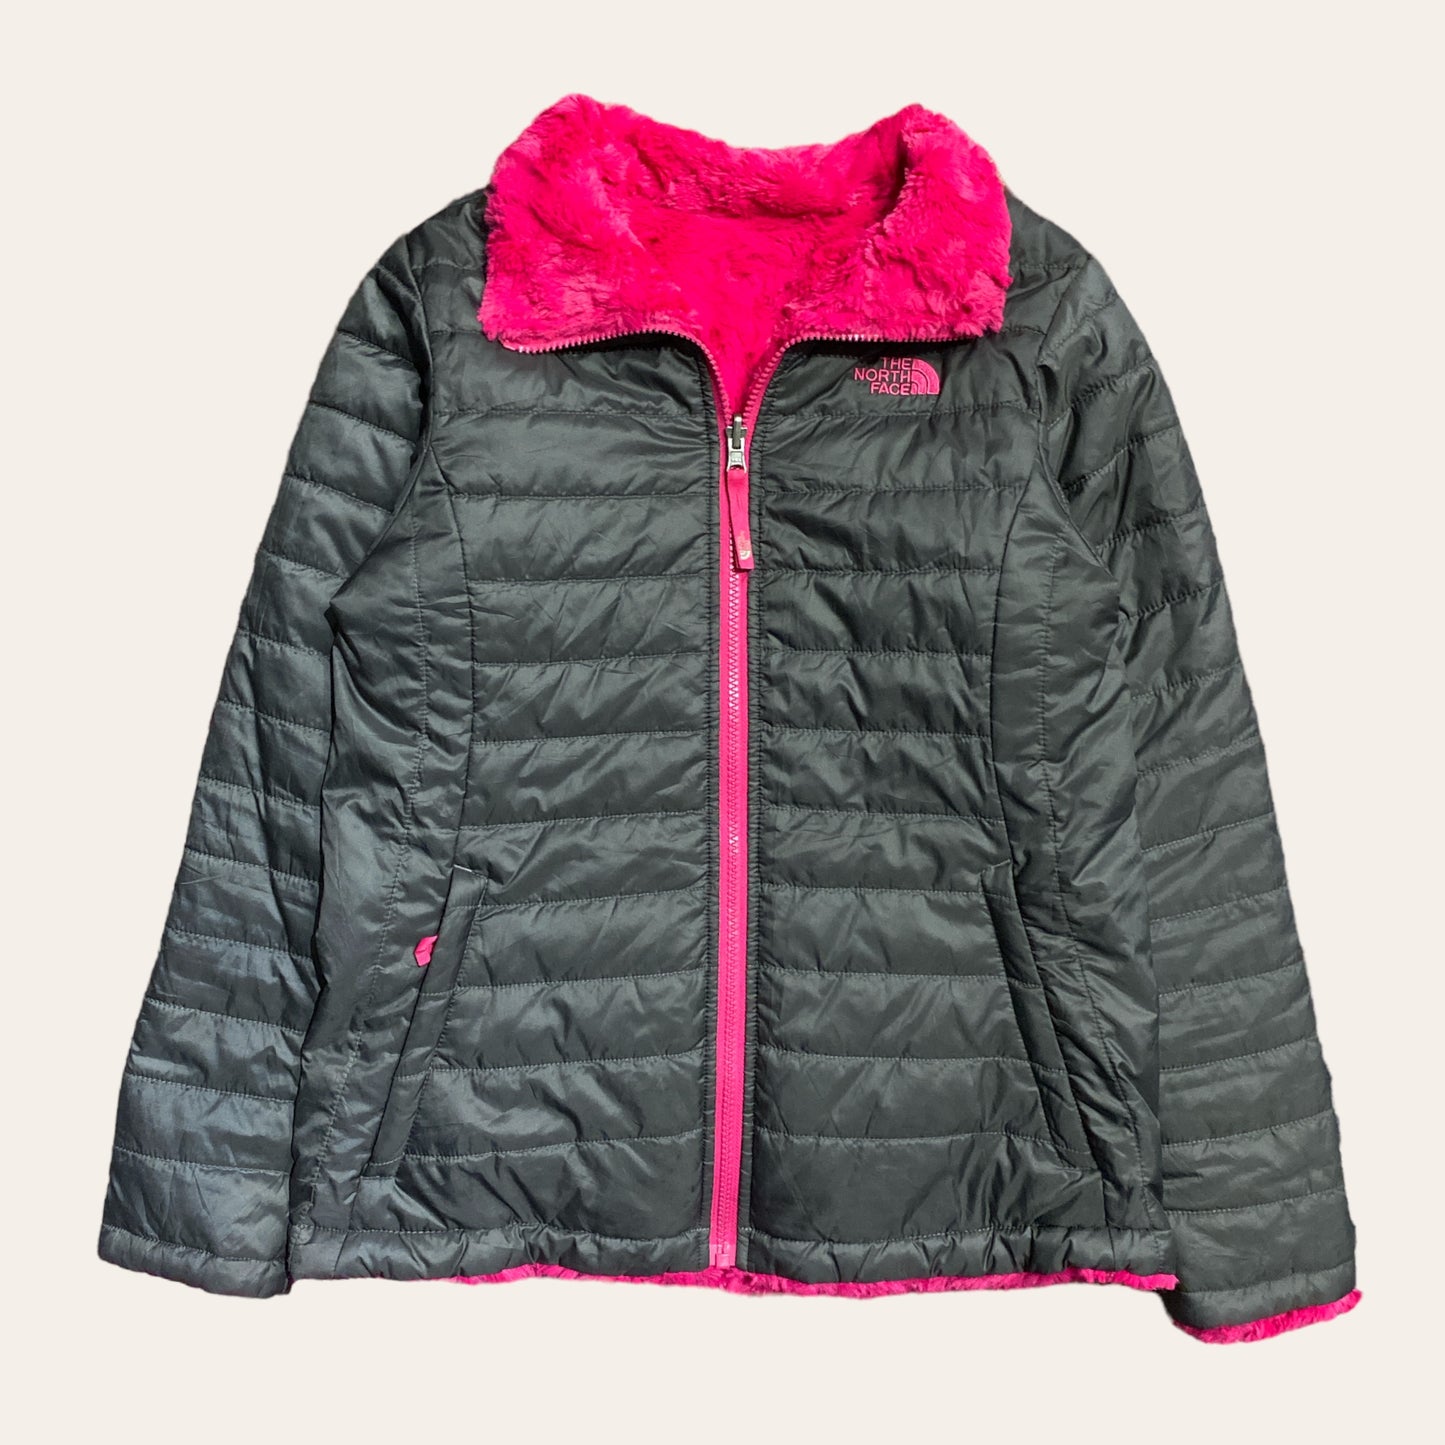 North Face Reversible Jacket Size Women's XL